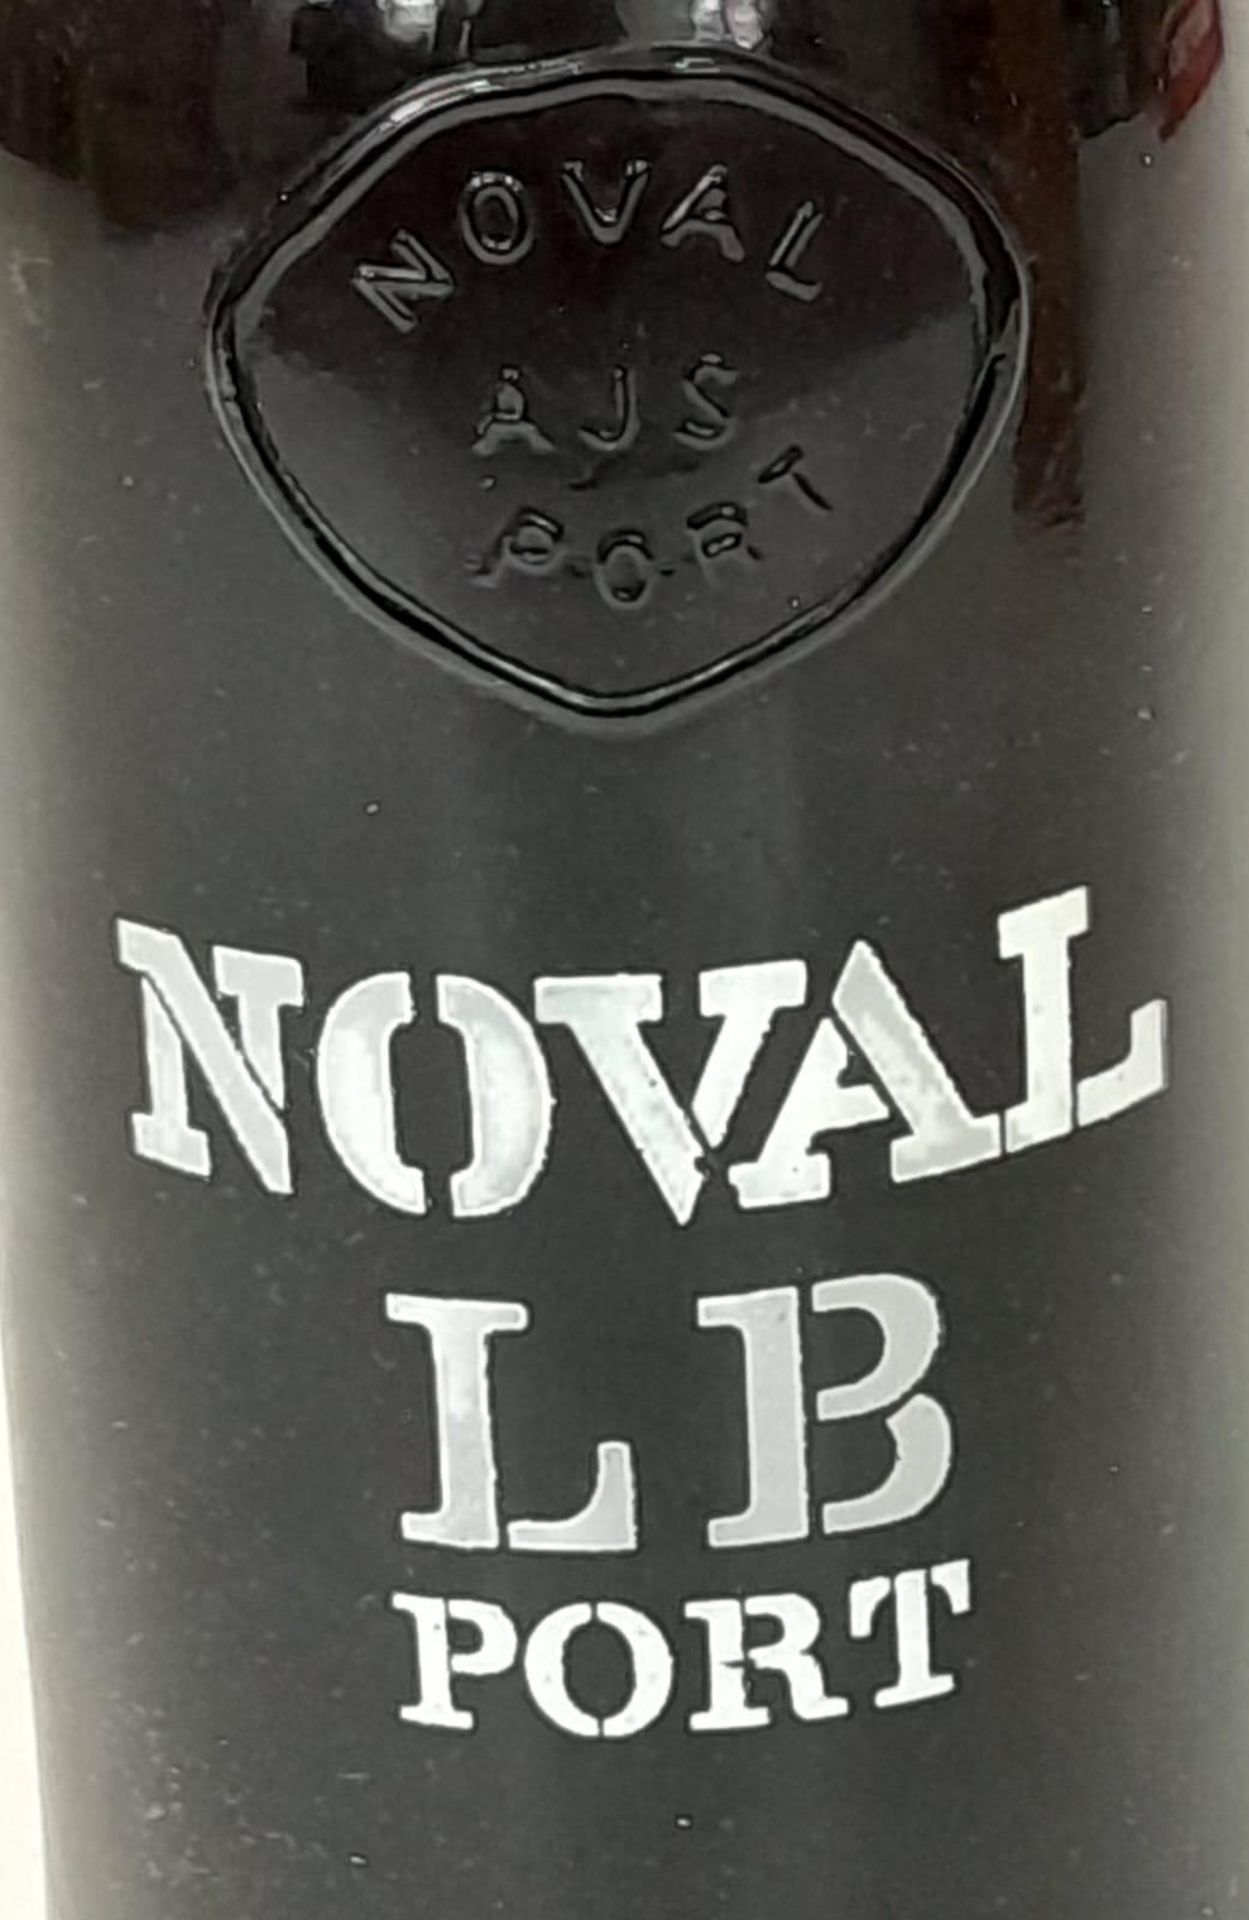 A Large Bottle of Noval LB Port in a Wooden Case - 150cl. - Image 5 of 7